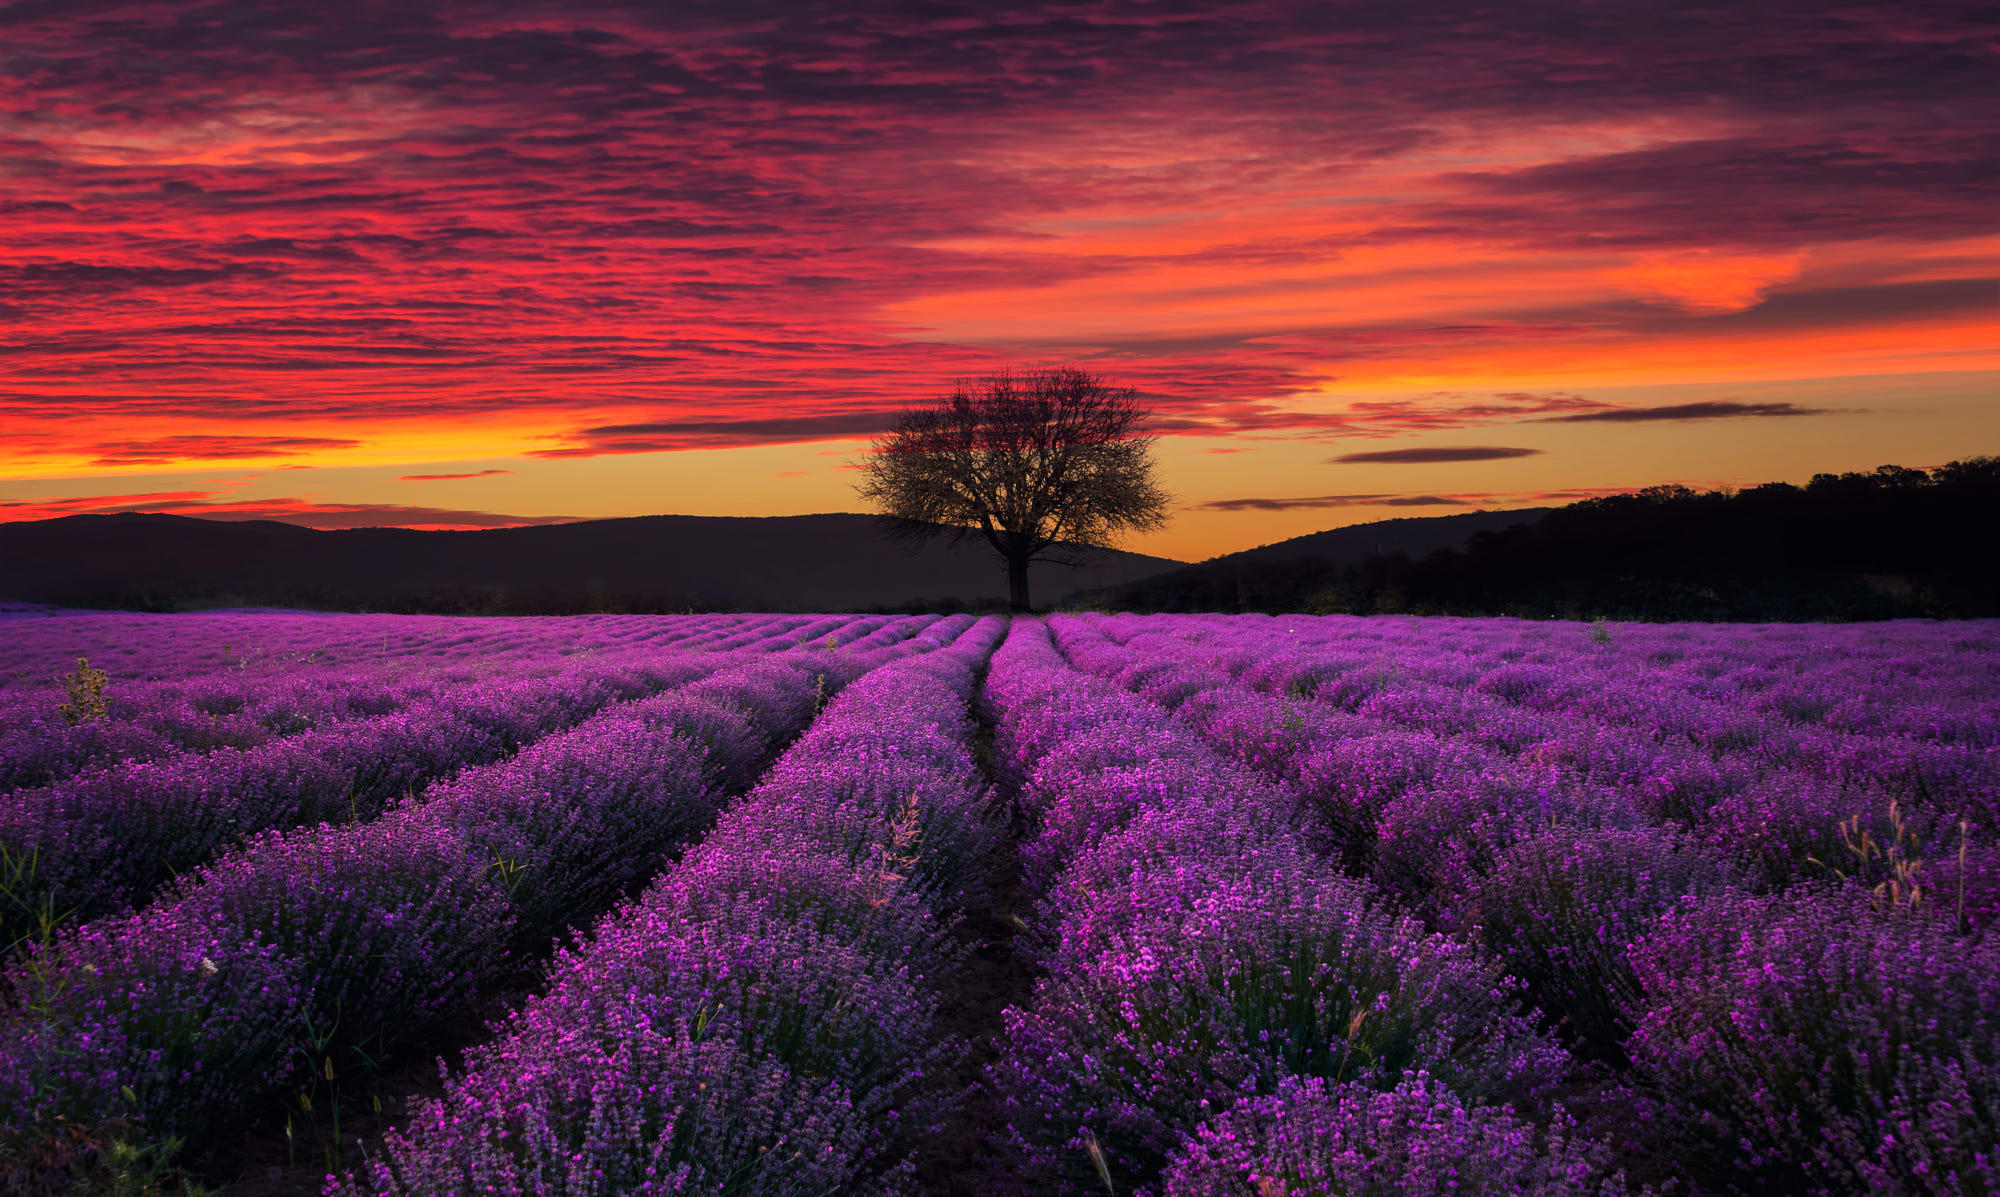 The Lavender Field